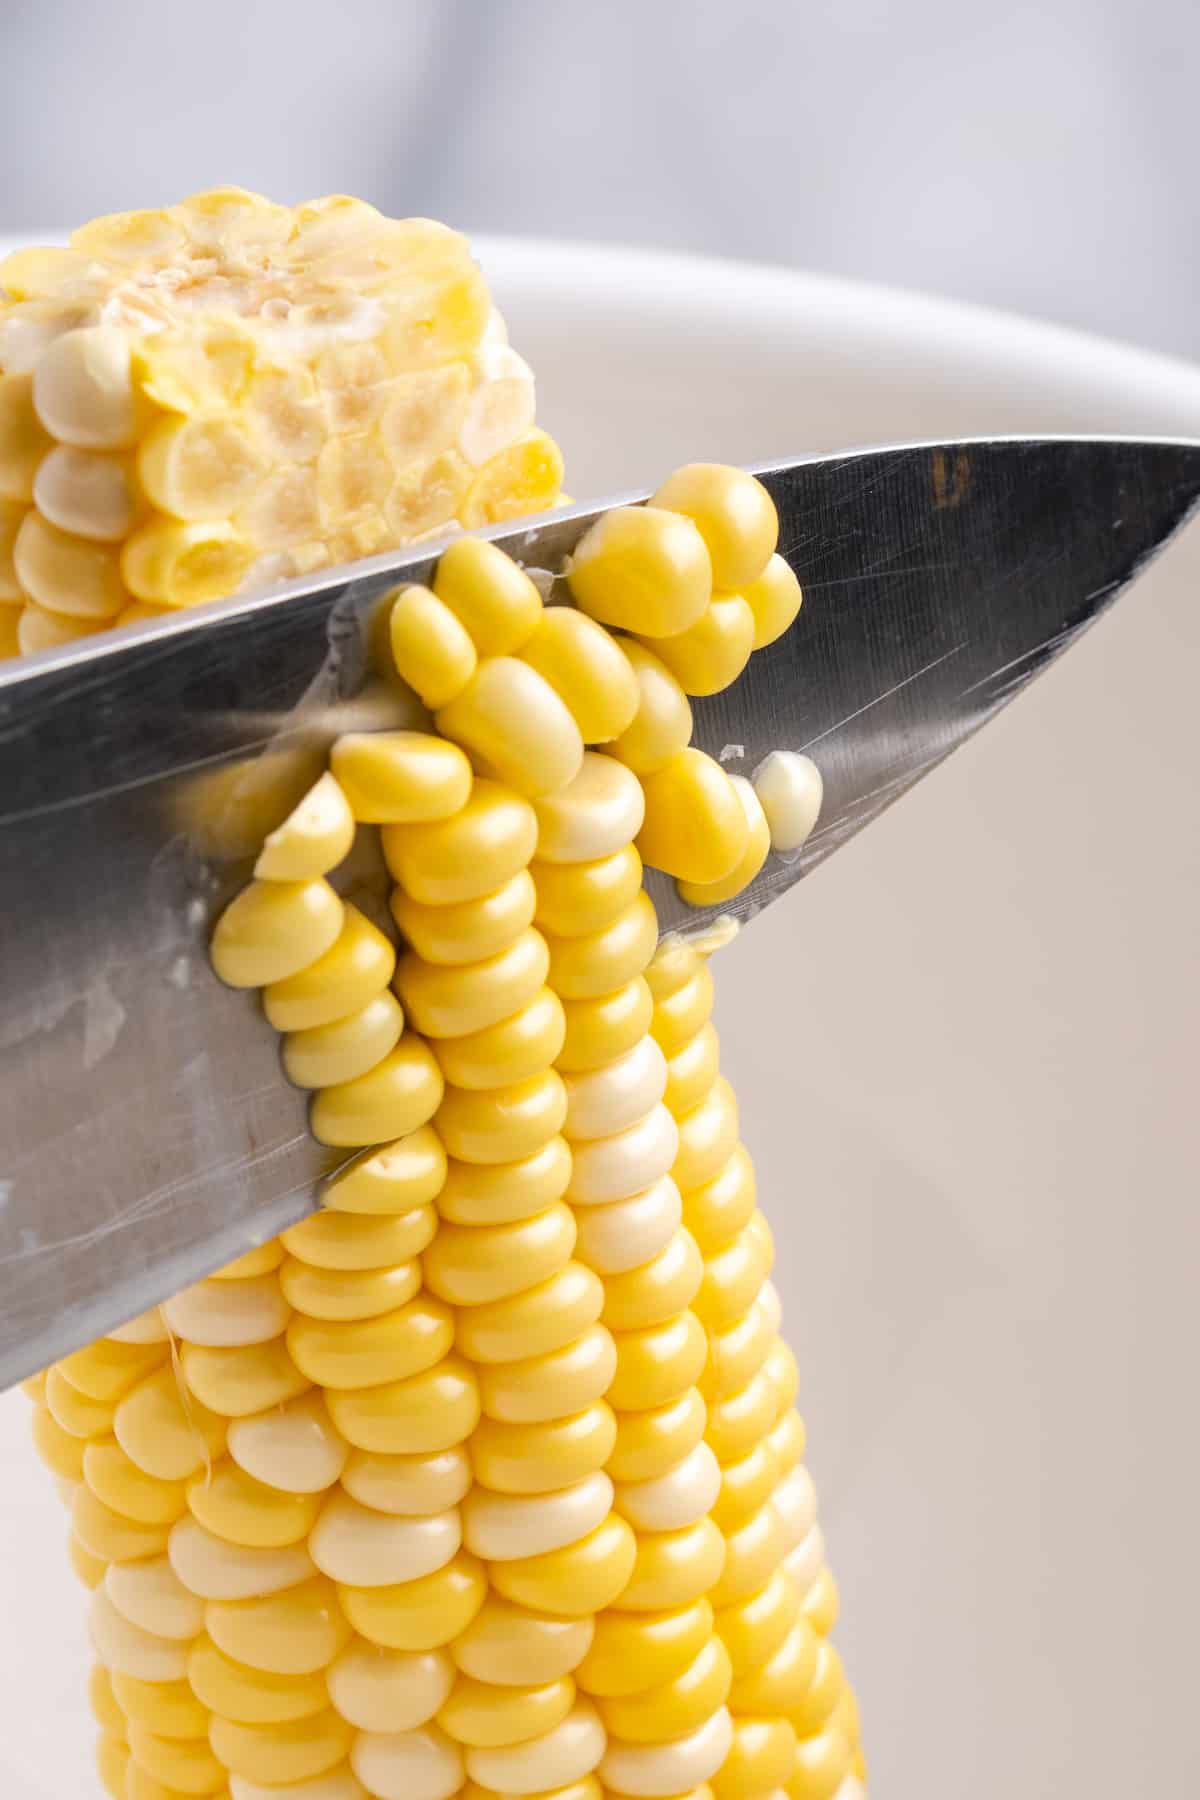 Knife cutting corn off cob